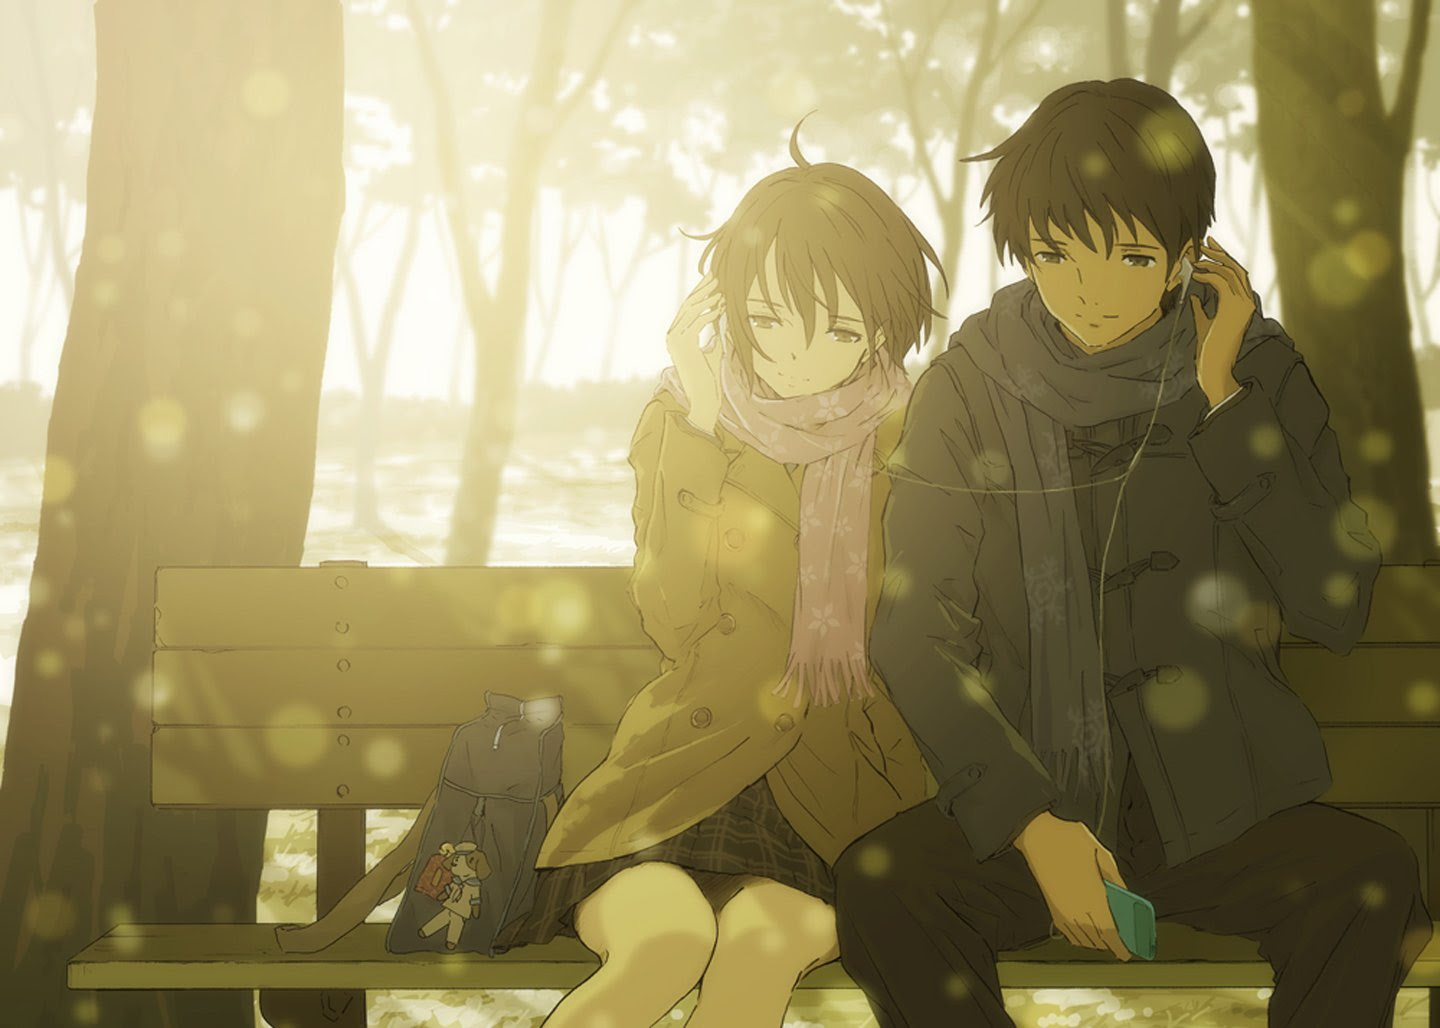 Love Couple Anime Wallpaper 22002 - Baltana